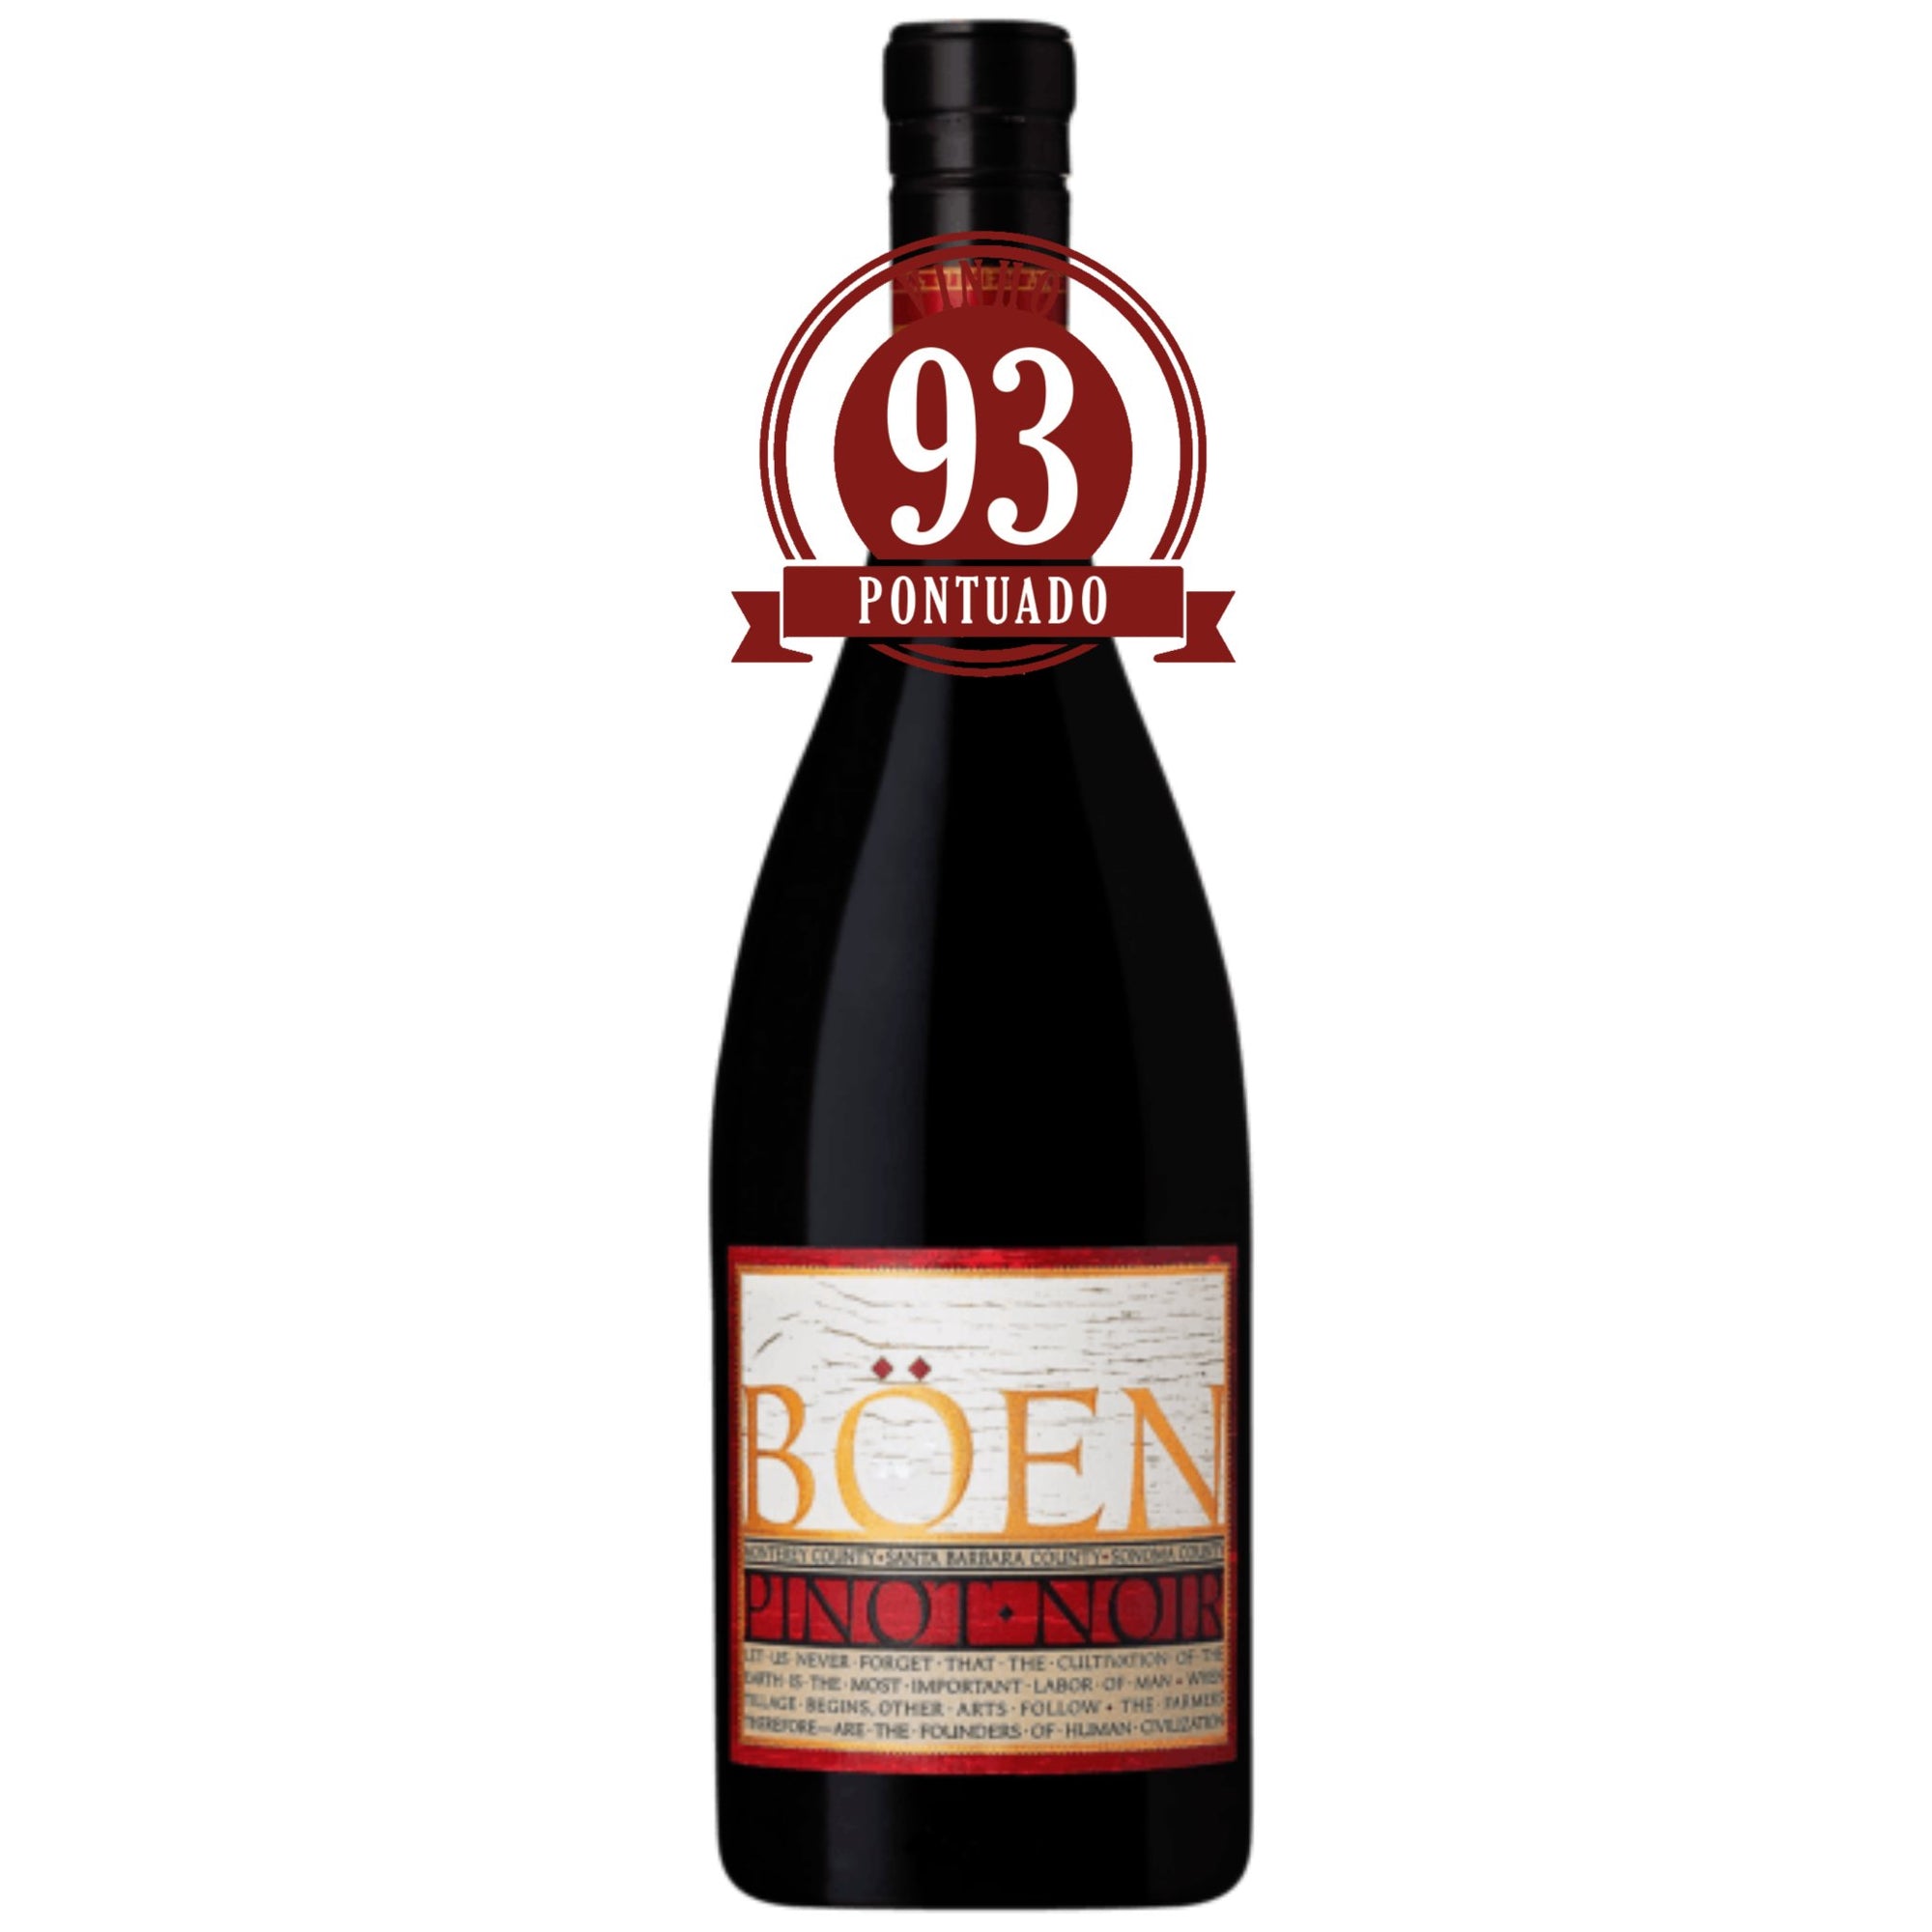 Boen Pinot Noir Tri-Appellation, California 2020 - SmartBuyWines.com.br